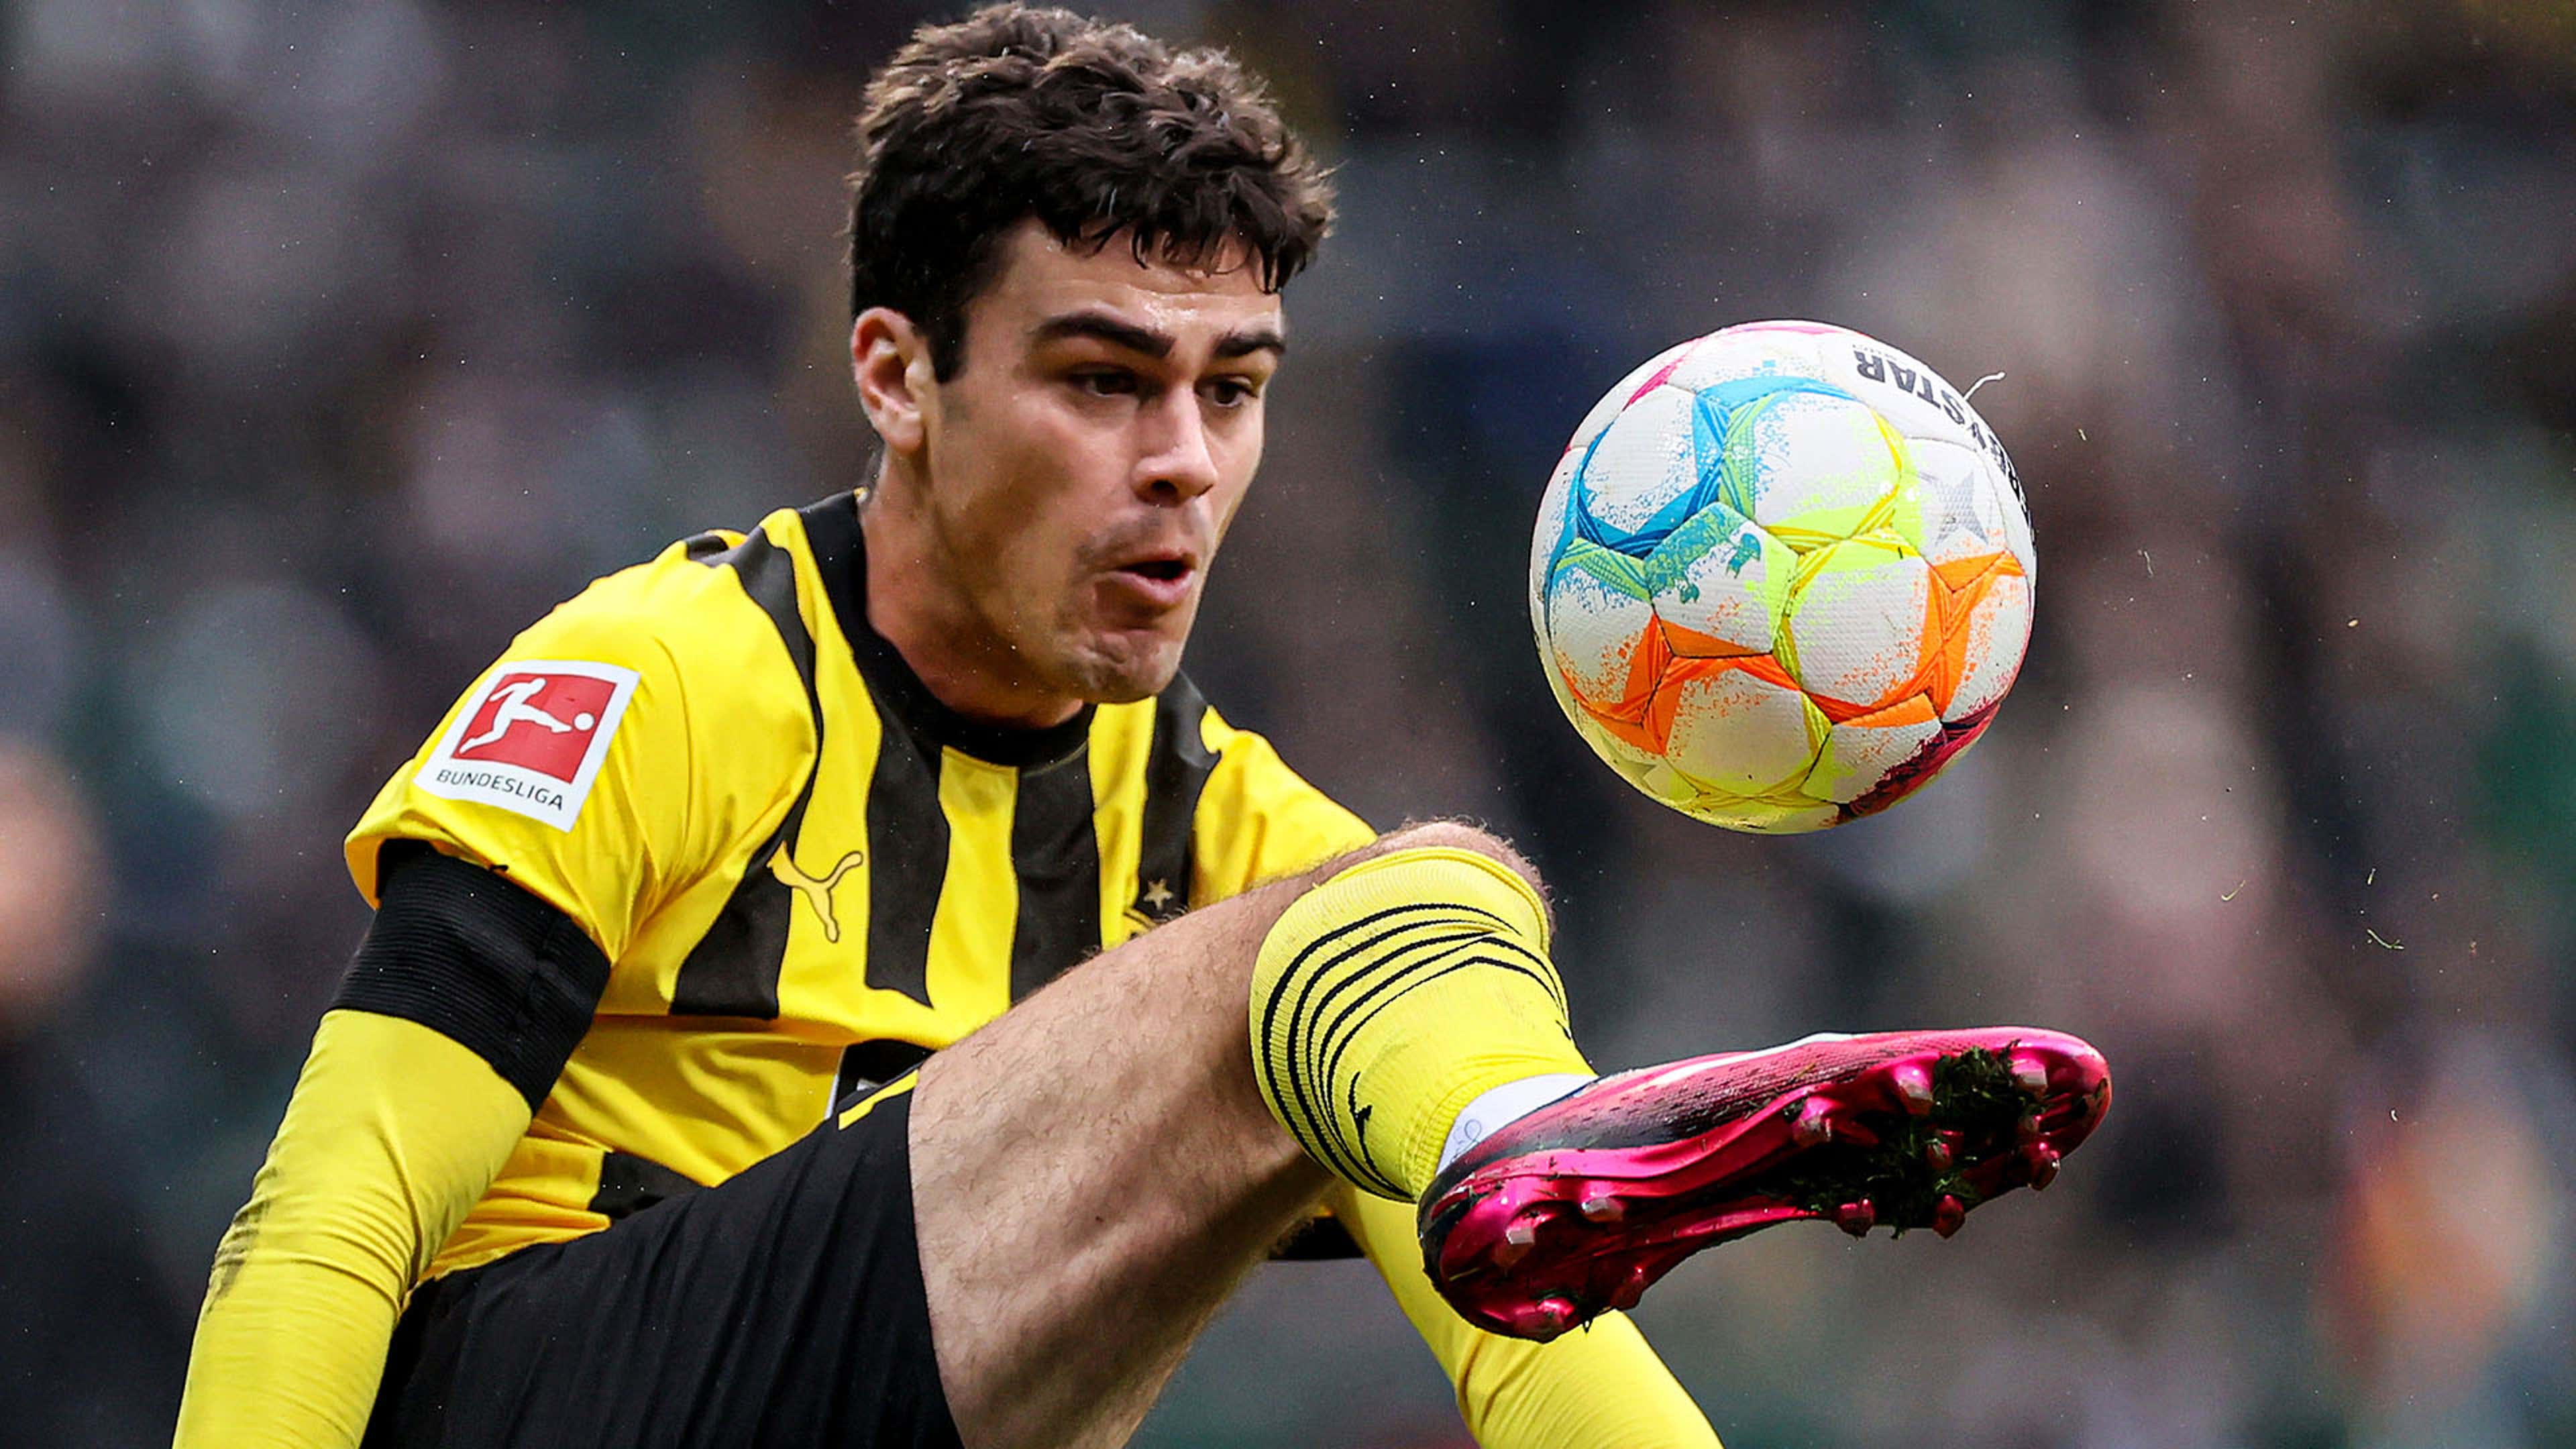 Giovanni Reyna of Borussia Dortmund U19 controls the ball during